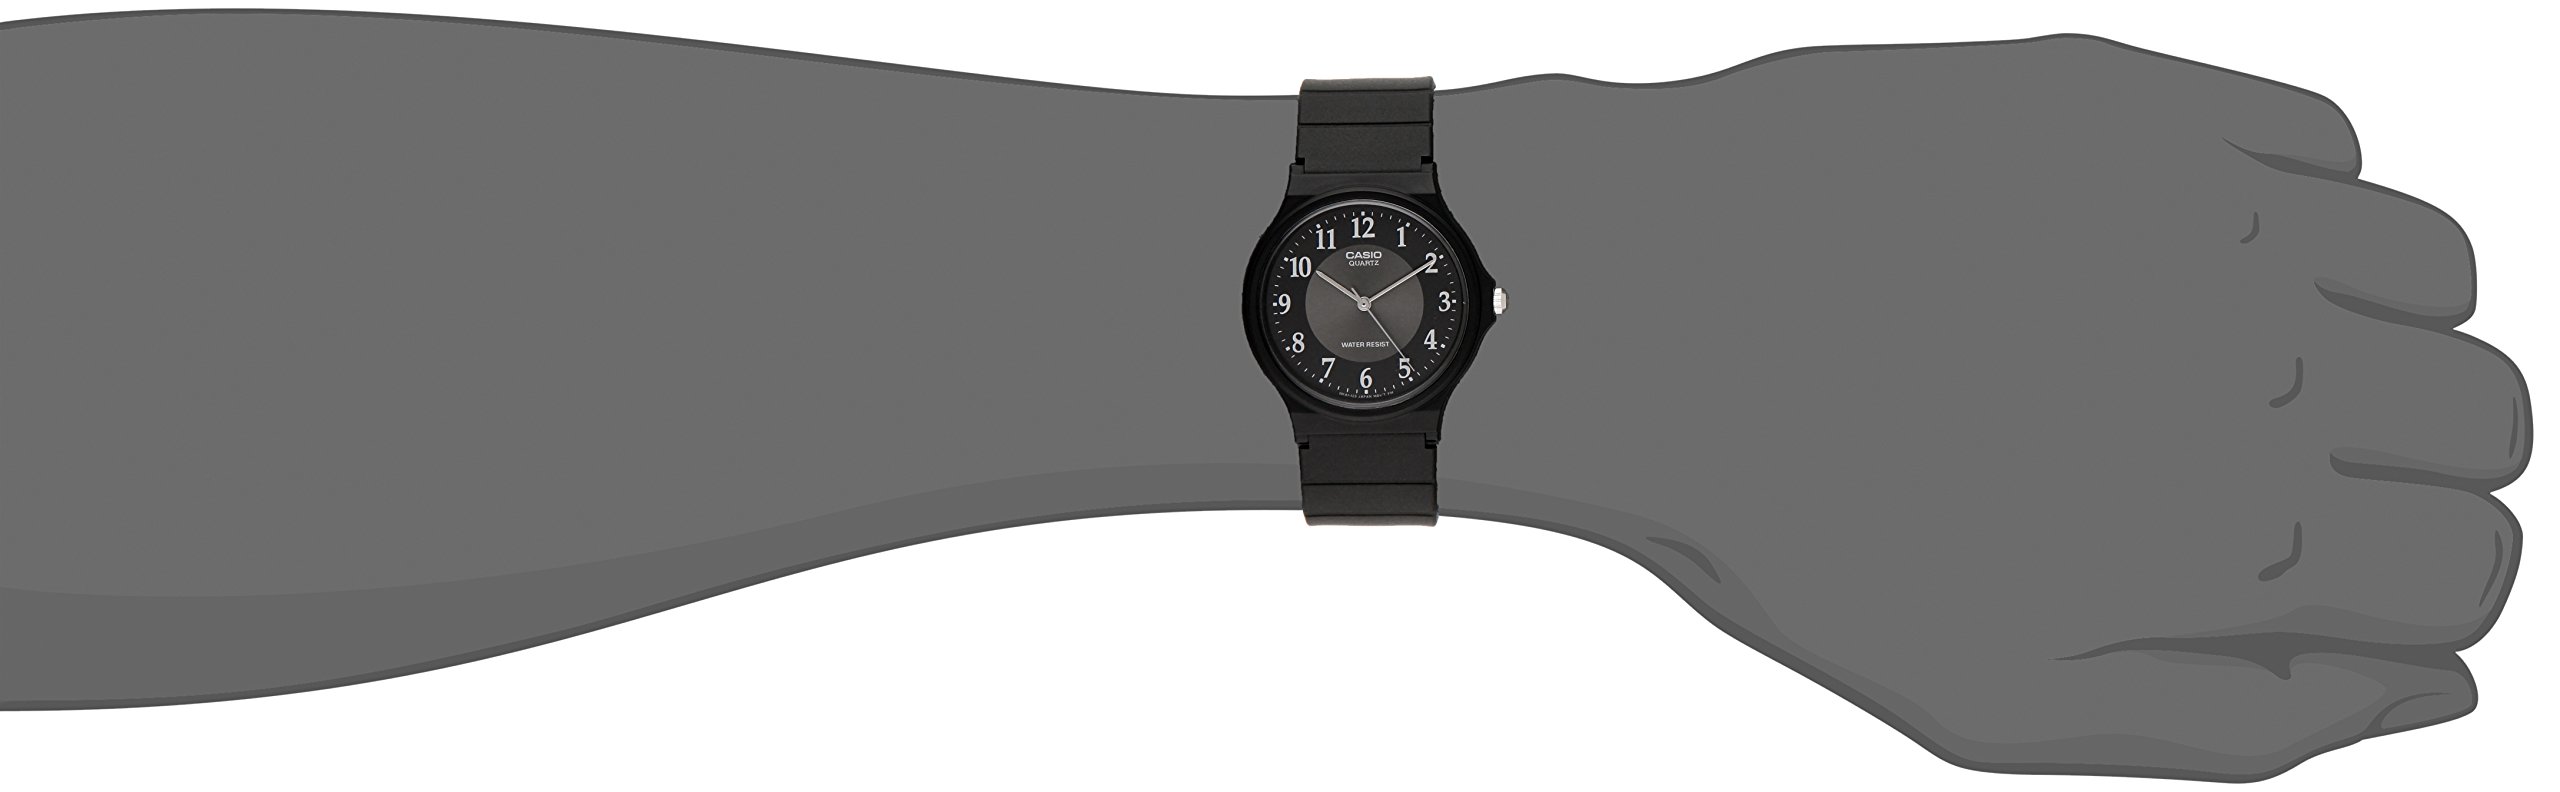 Casio Men's MQ24-1B3 Watch with Black Rubber Band